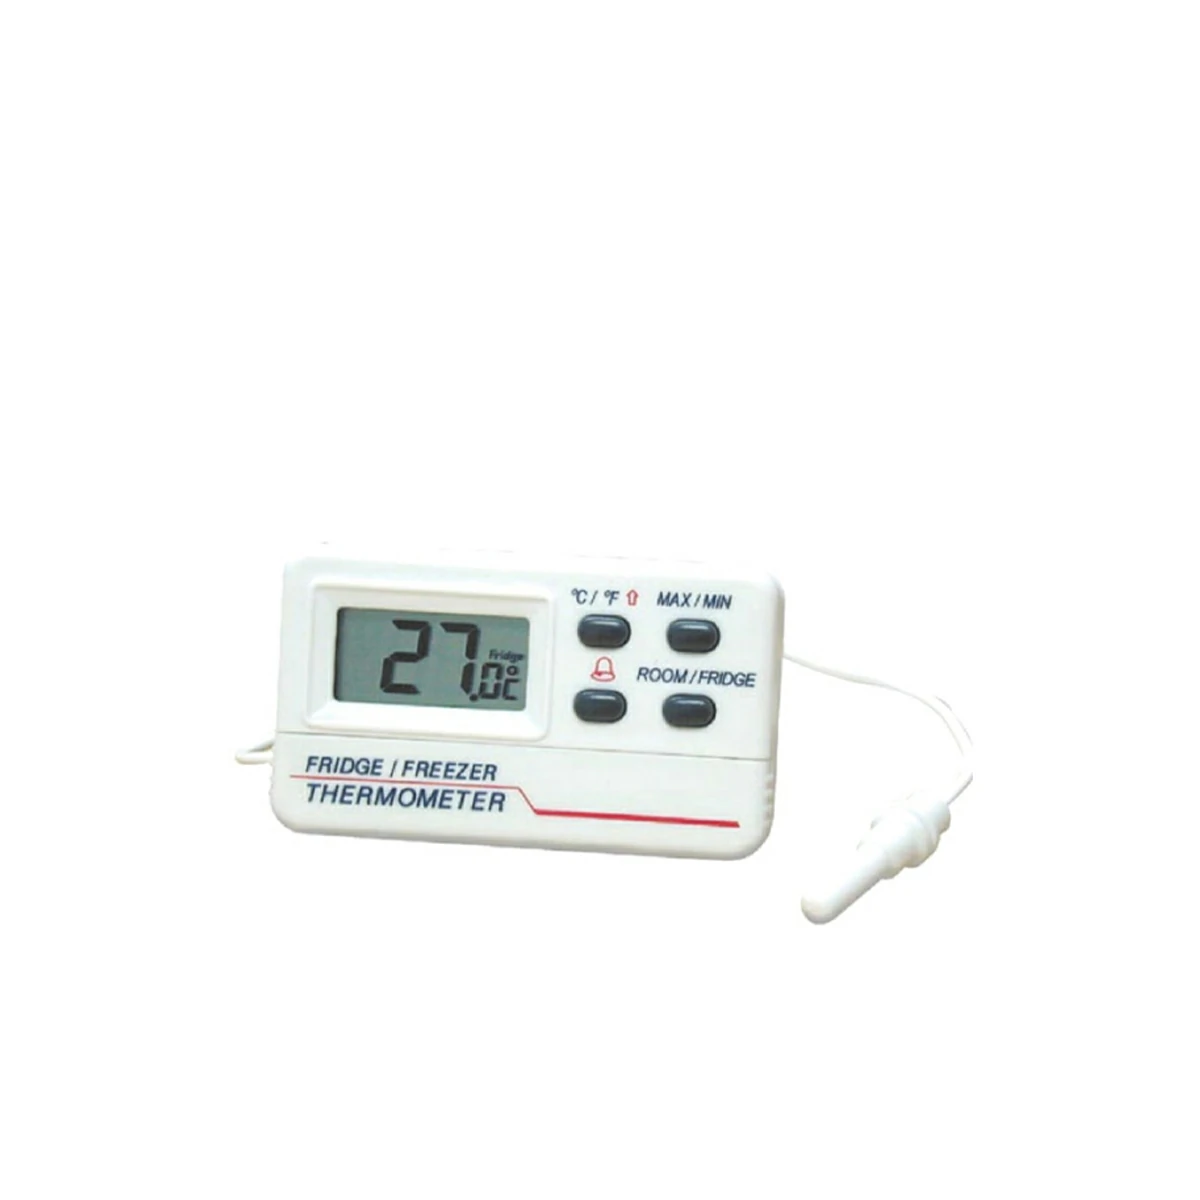 Digital Fridge/Freezer Thermometer -50 To 70Â°C